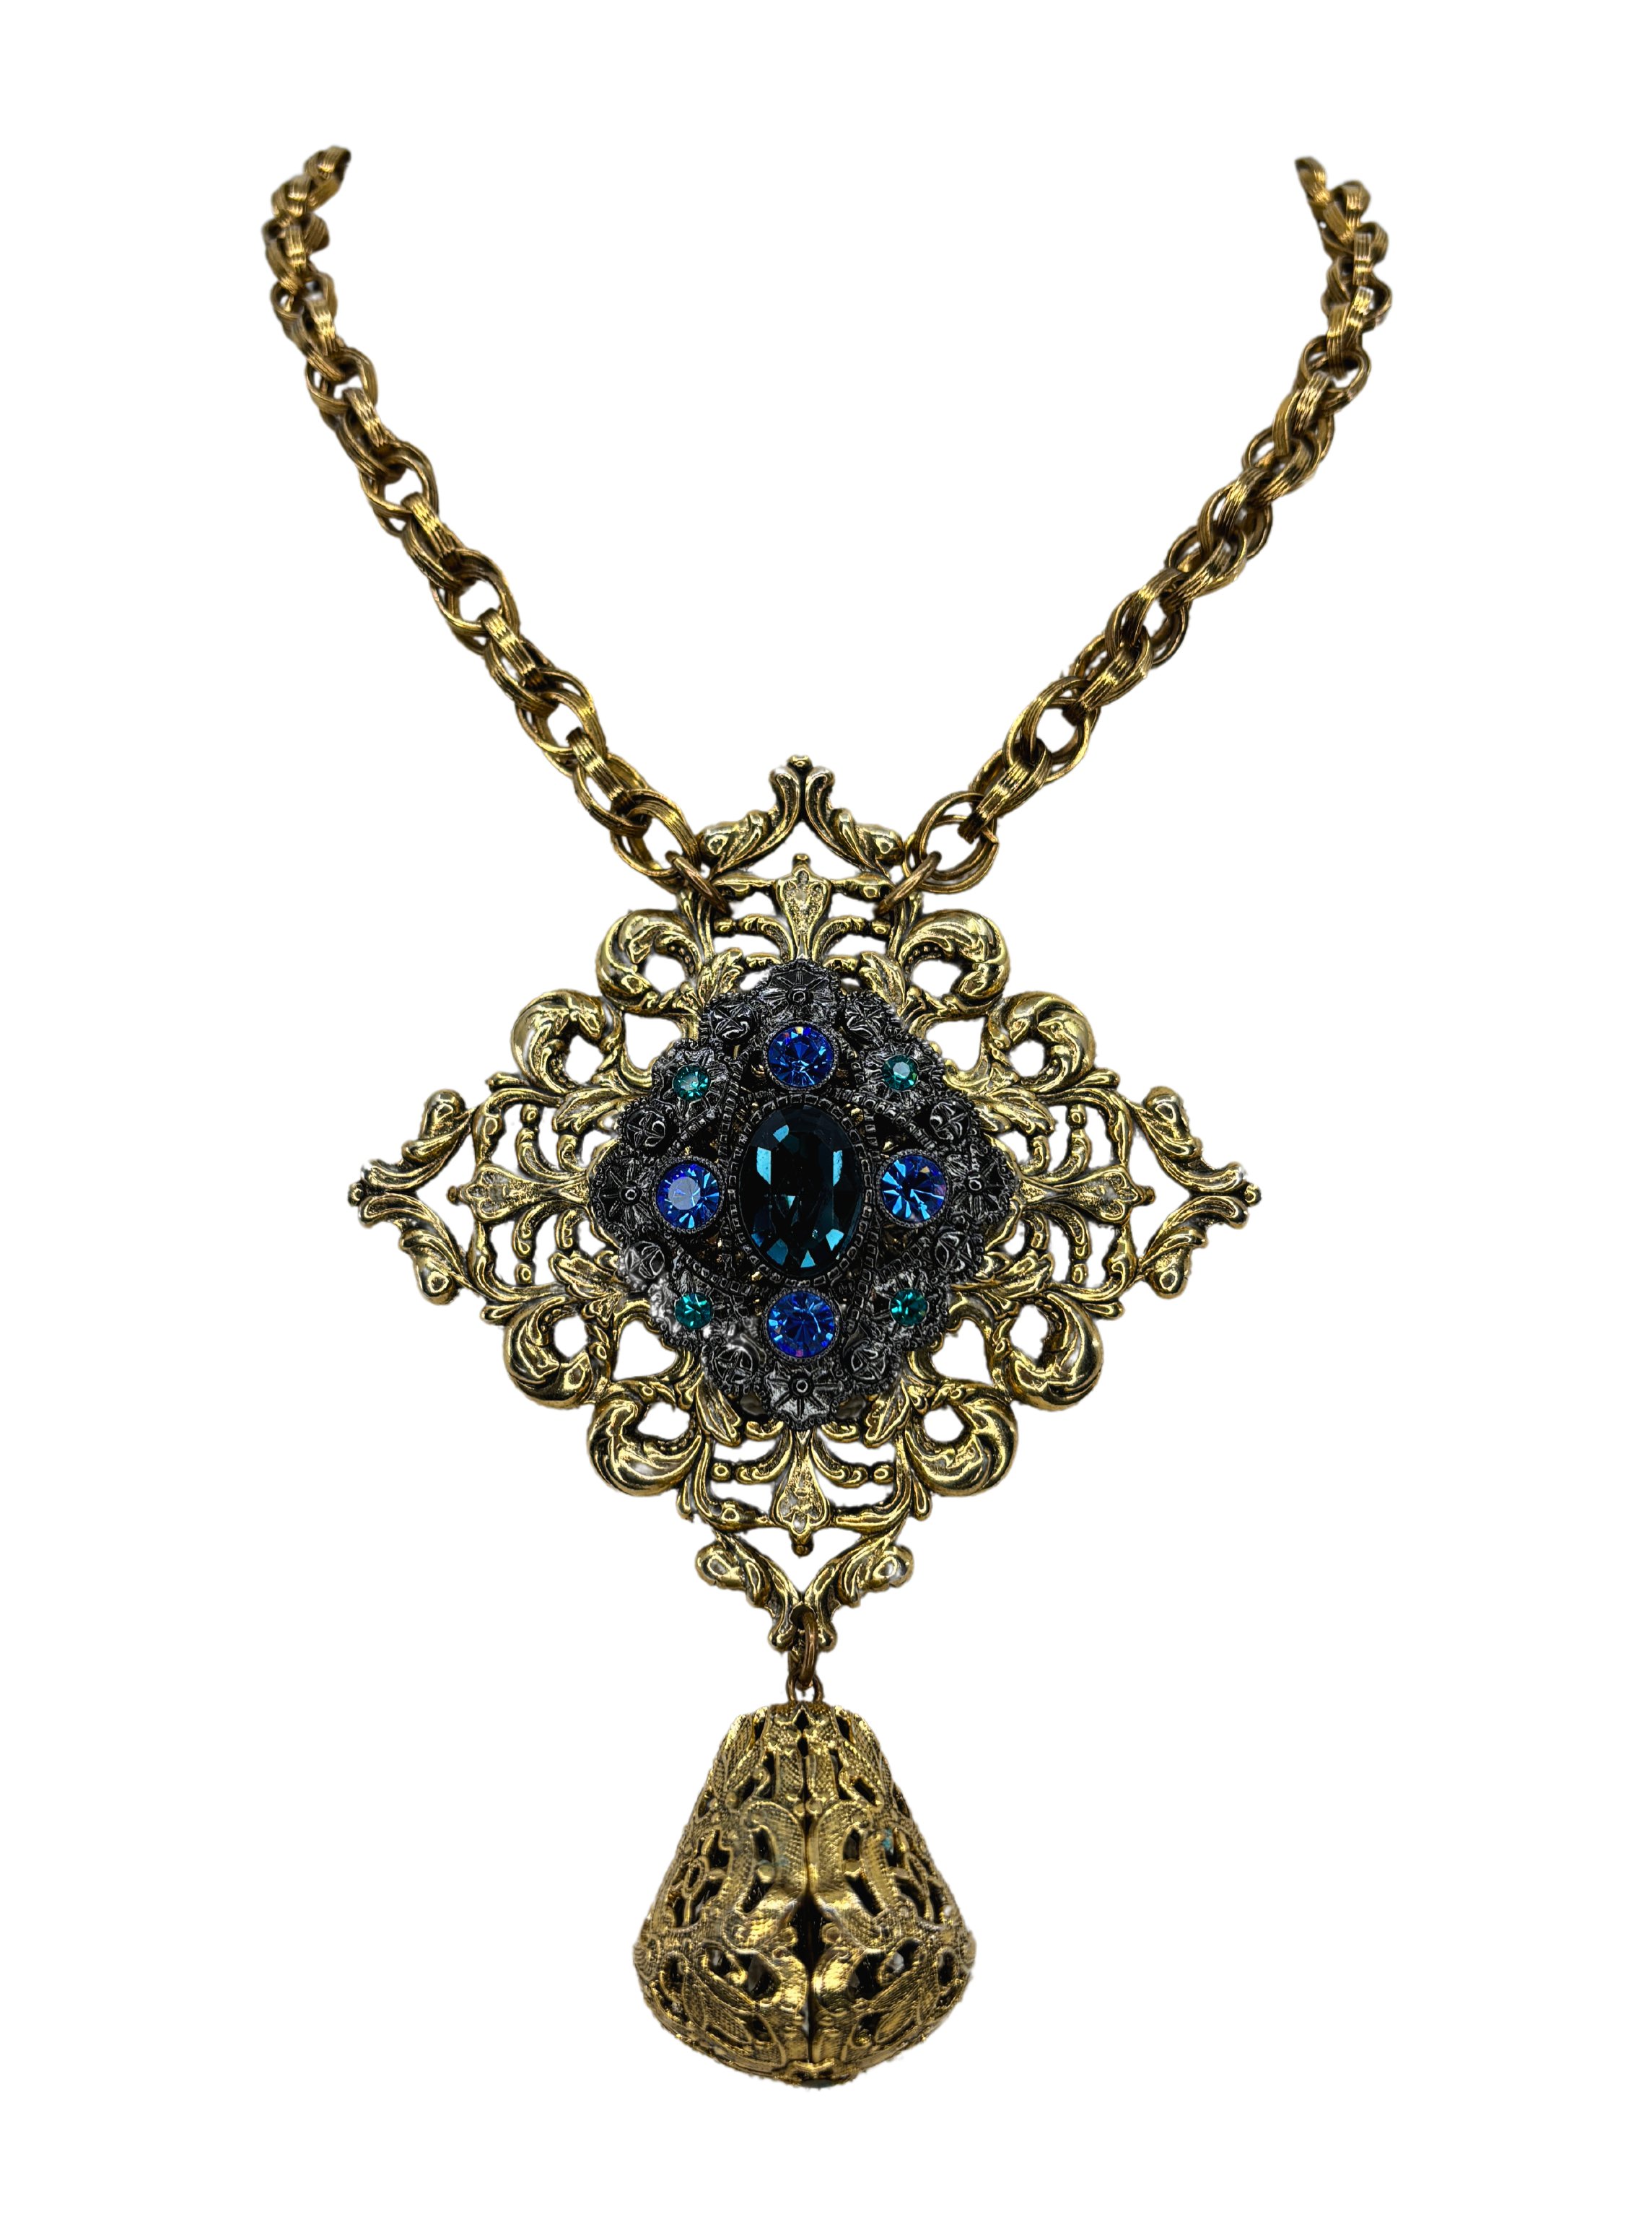 Vintage Diamond-Shaped Brooch Necklace